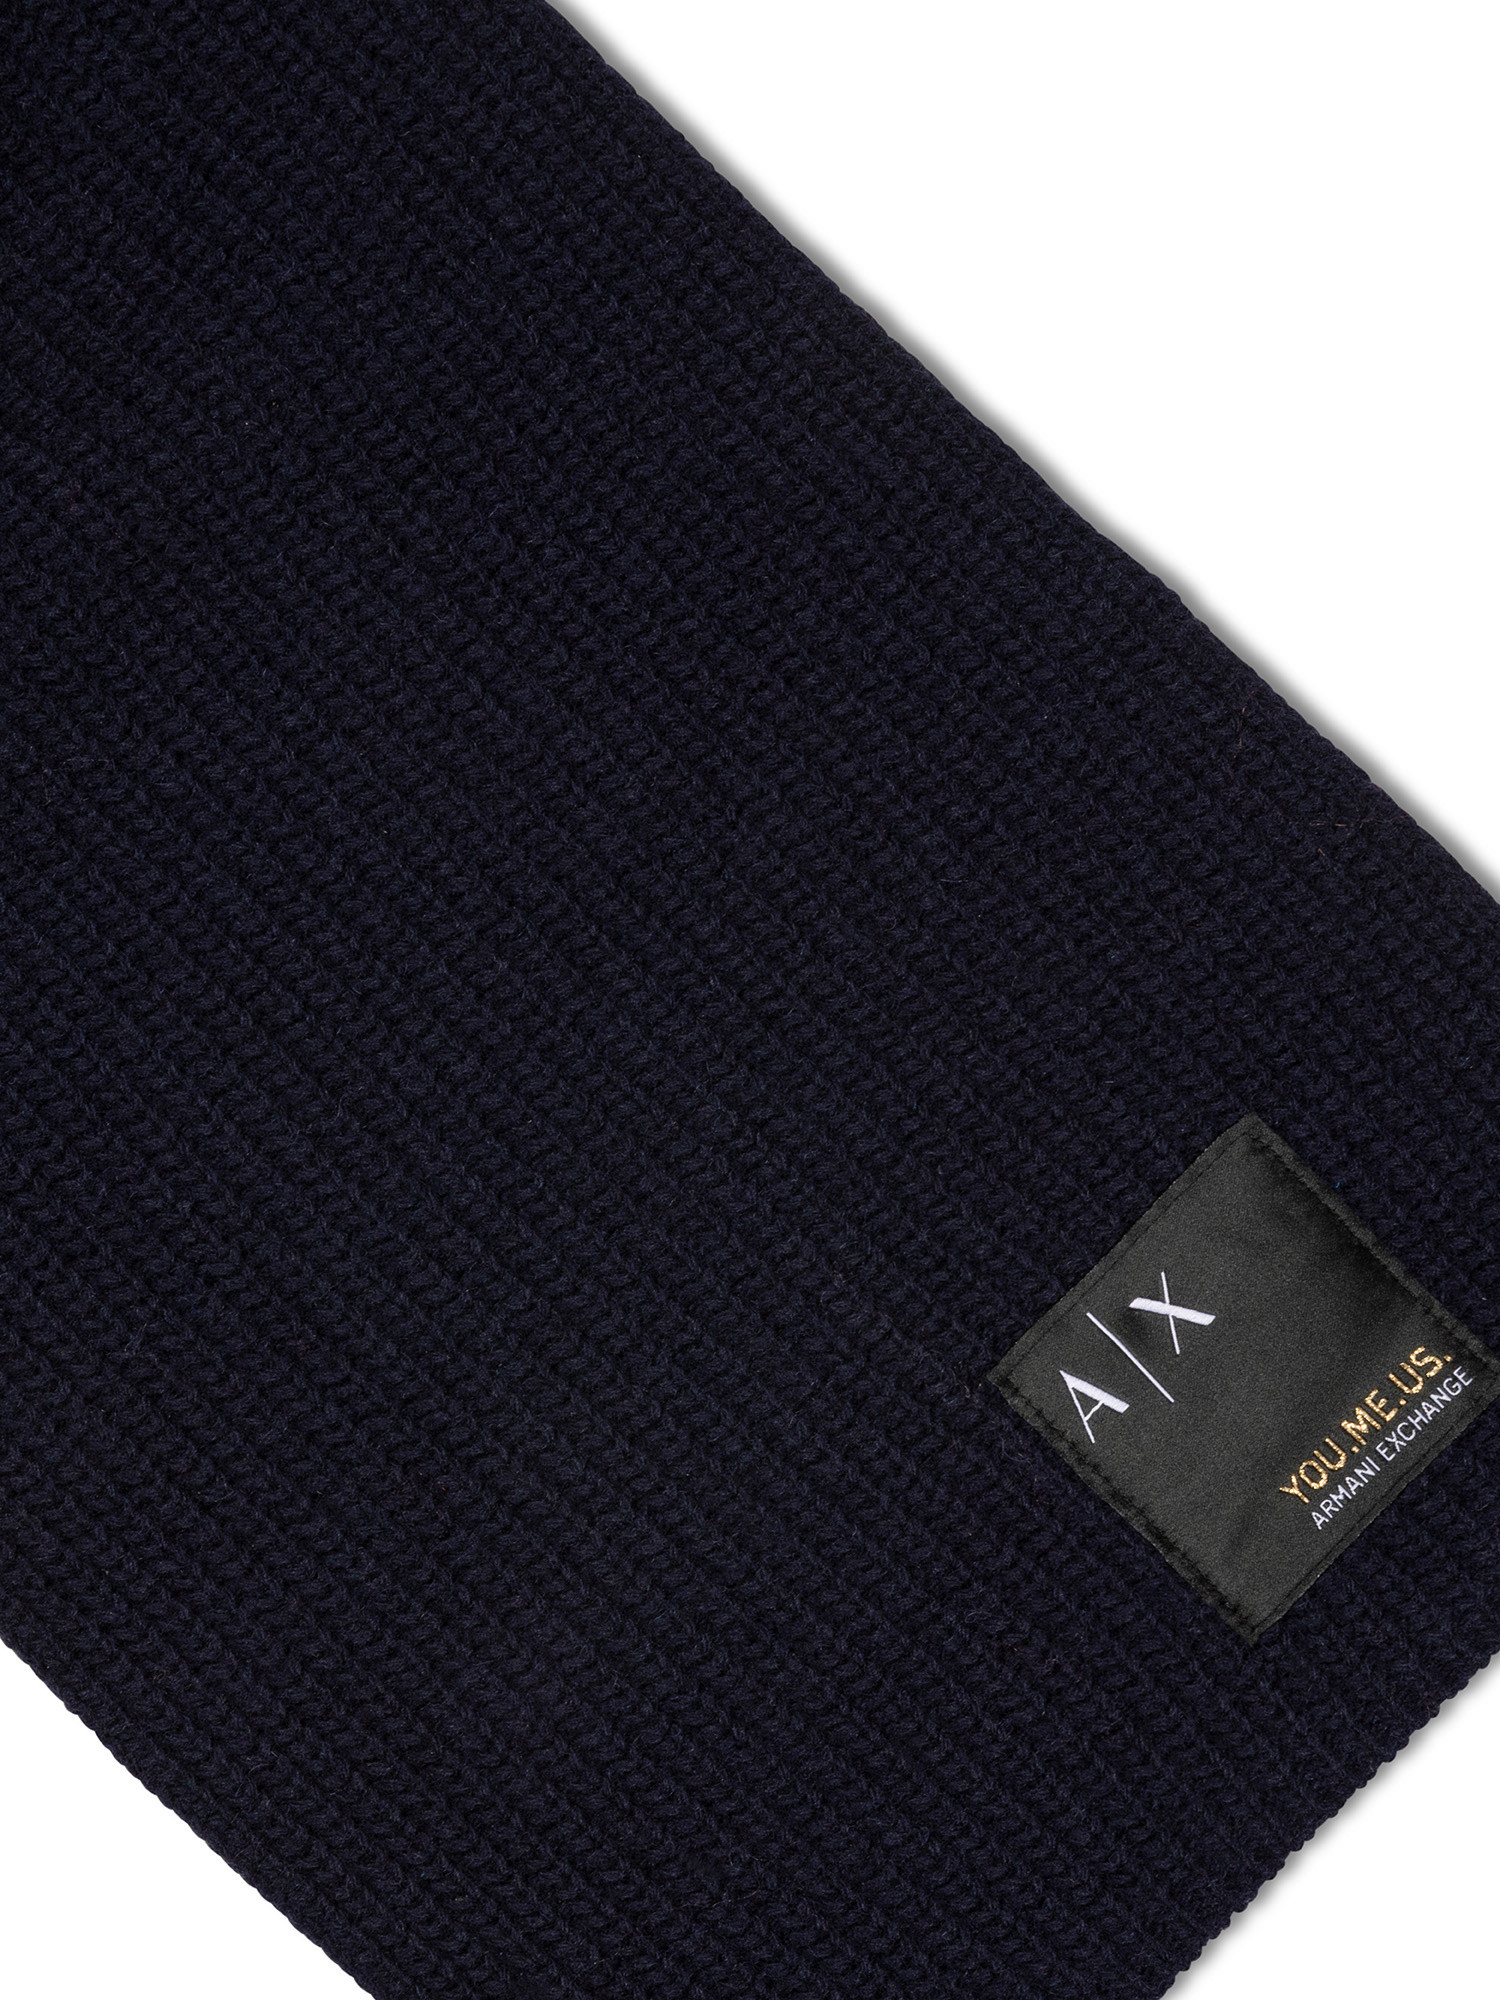 Armani Exchange - Scarf in recycled wool blend, Dark Blue, large image number 1